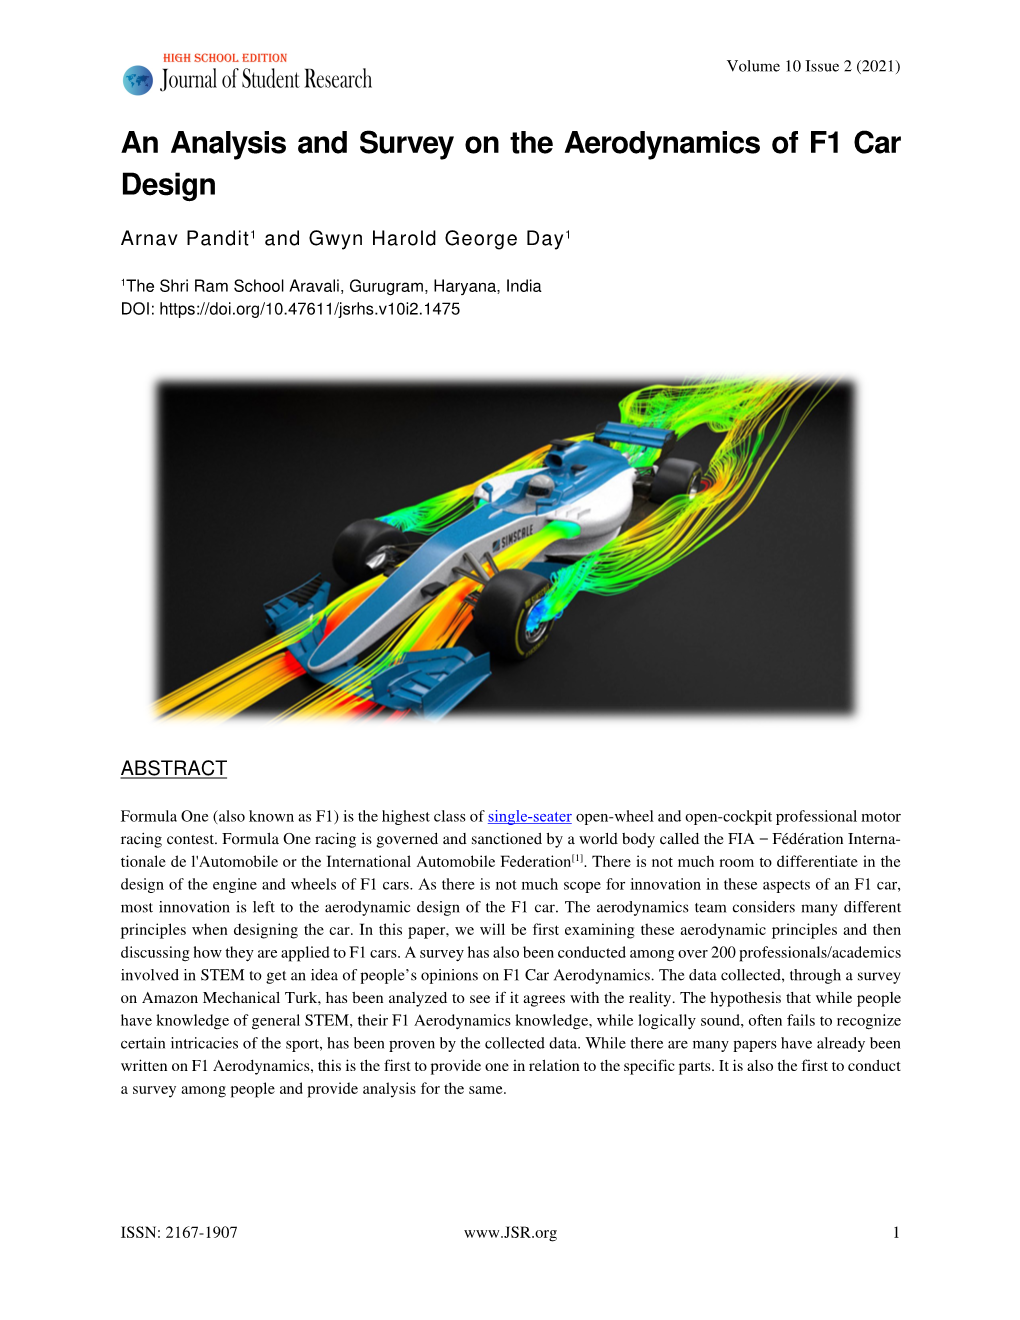 An Analysis and Survey on the Aerodynamics of F1 Car Design